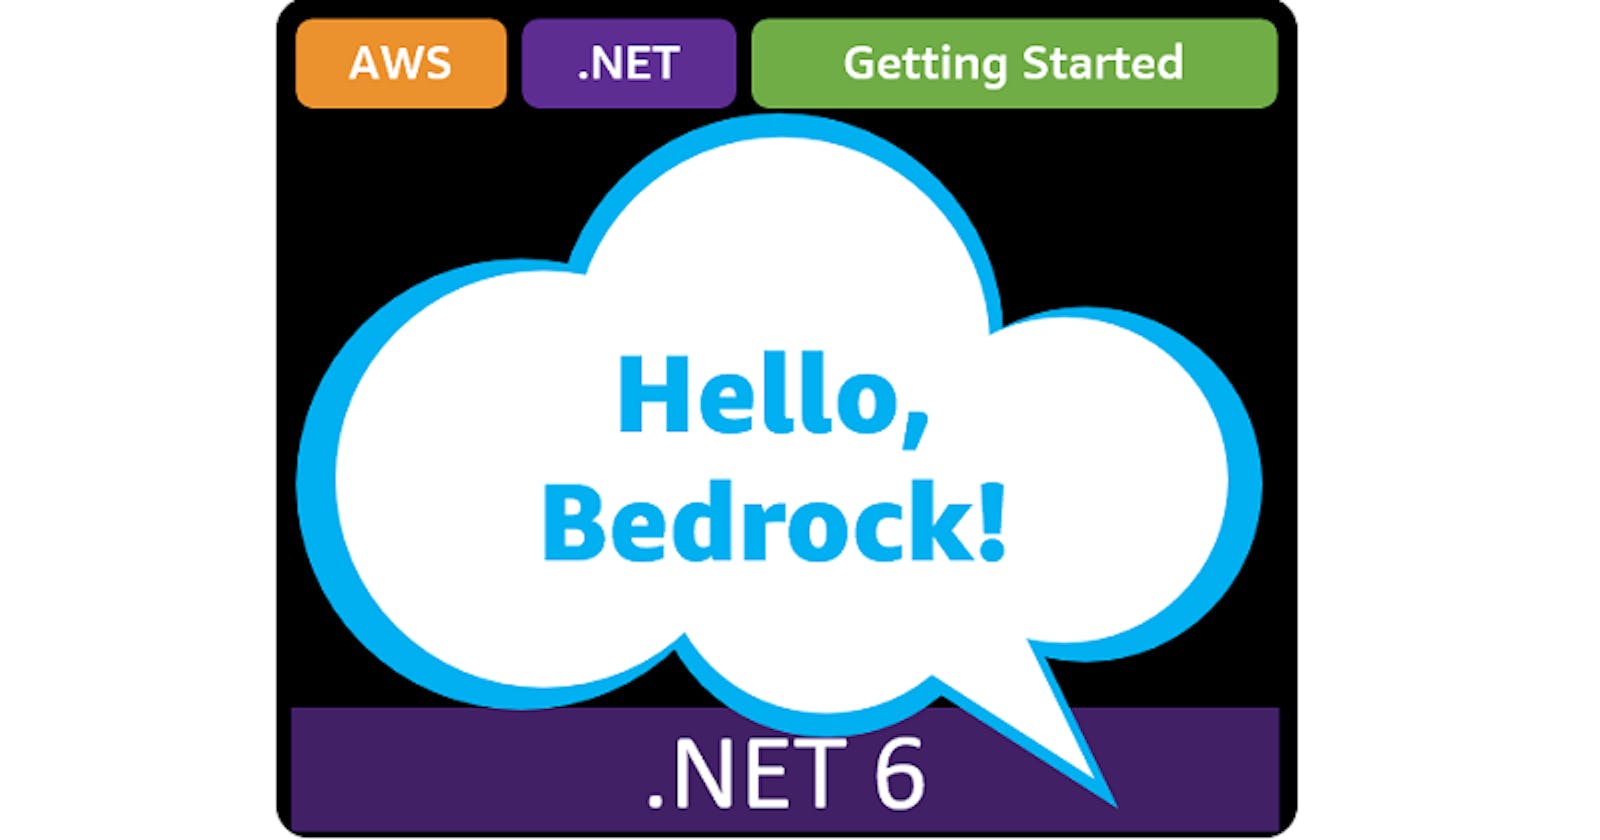 Hello, Bedrock!